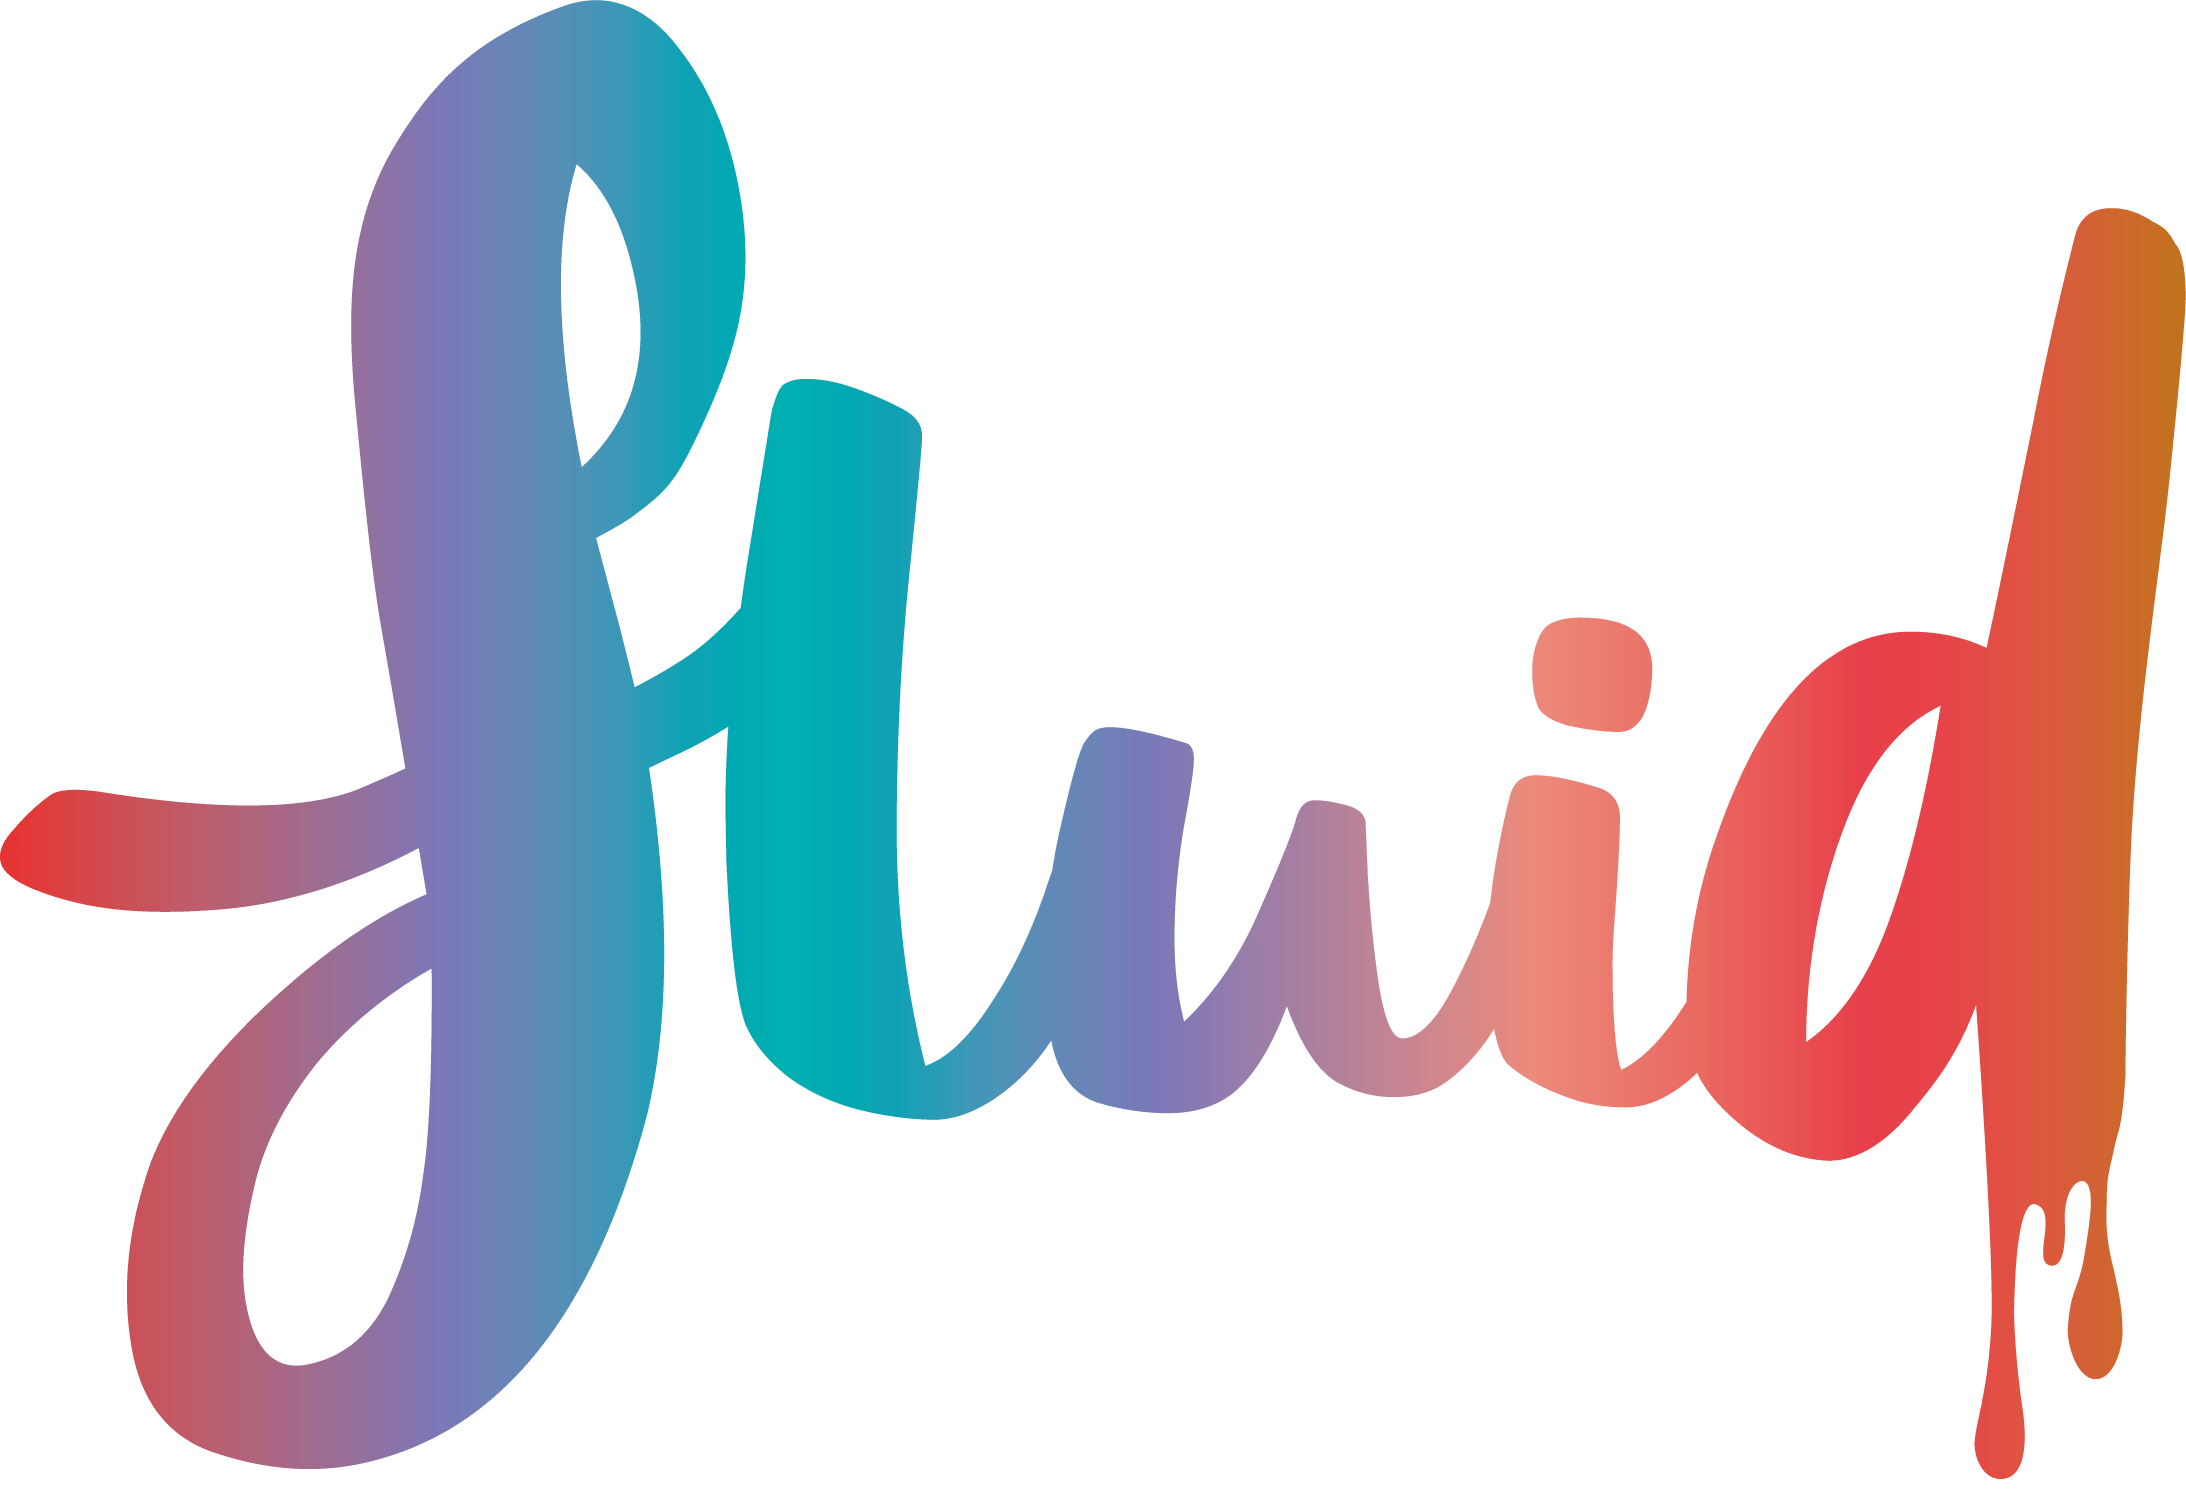 The Fluid Project logo.